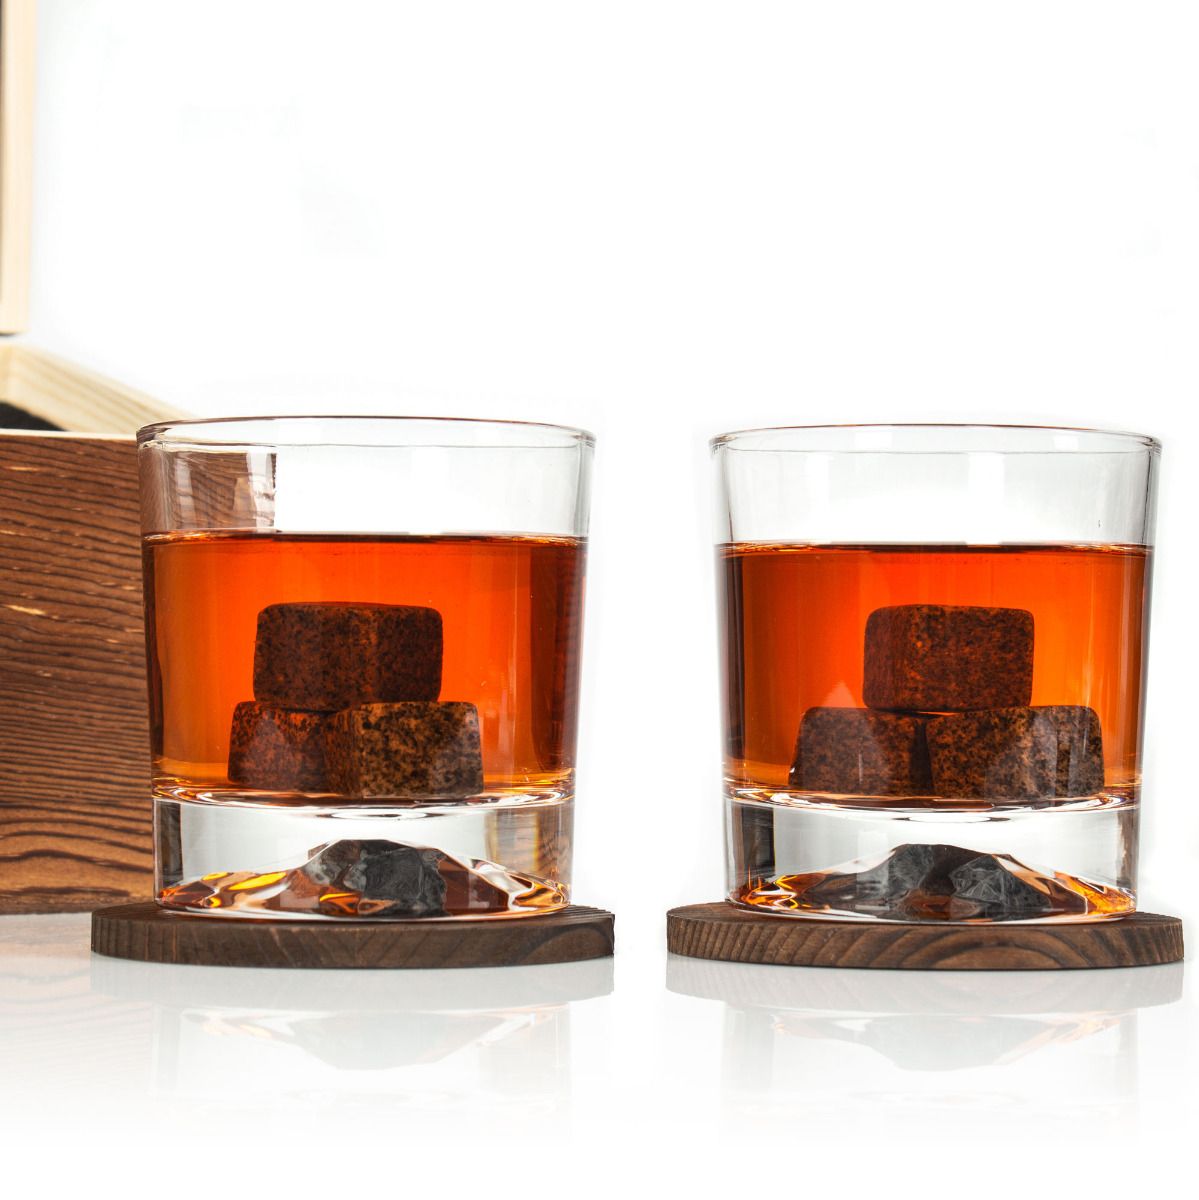 Custom Engraved Star Trek Emblem - Personalized Whiskey Glasses In Wood  Gift Box